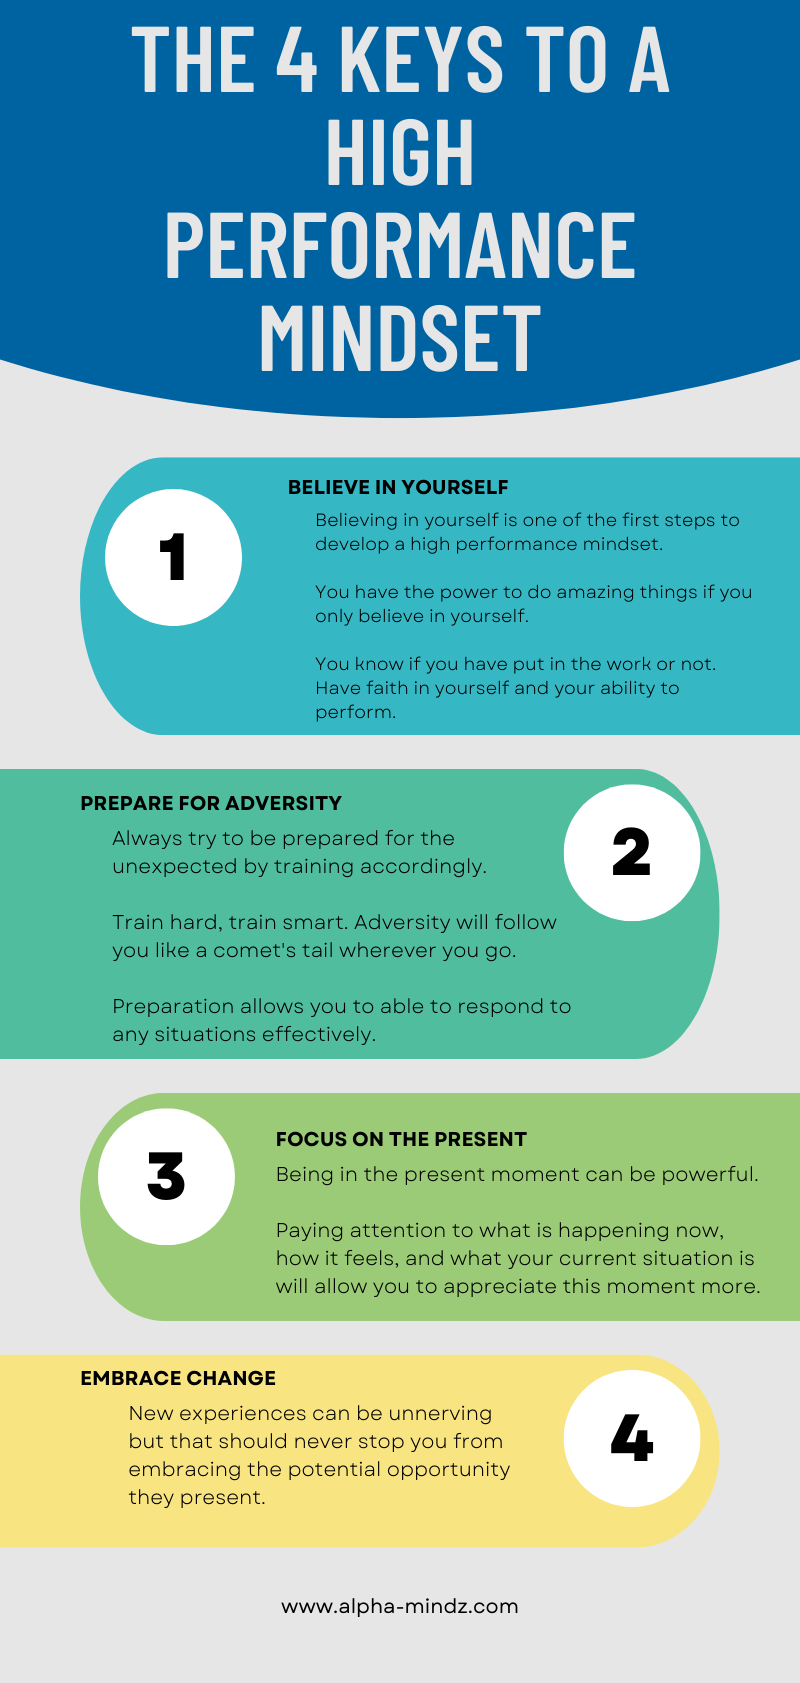 The 4 Keys to a high performance mindset